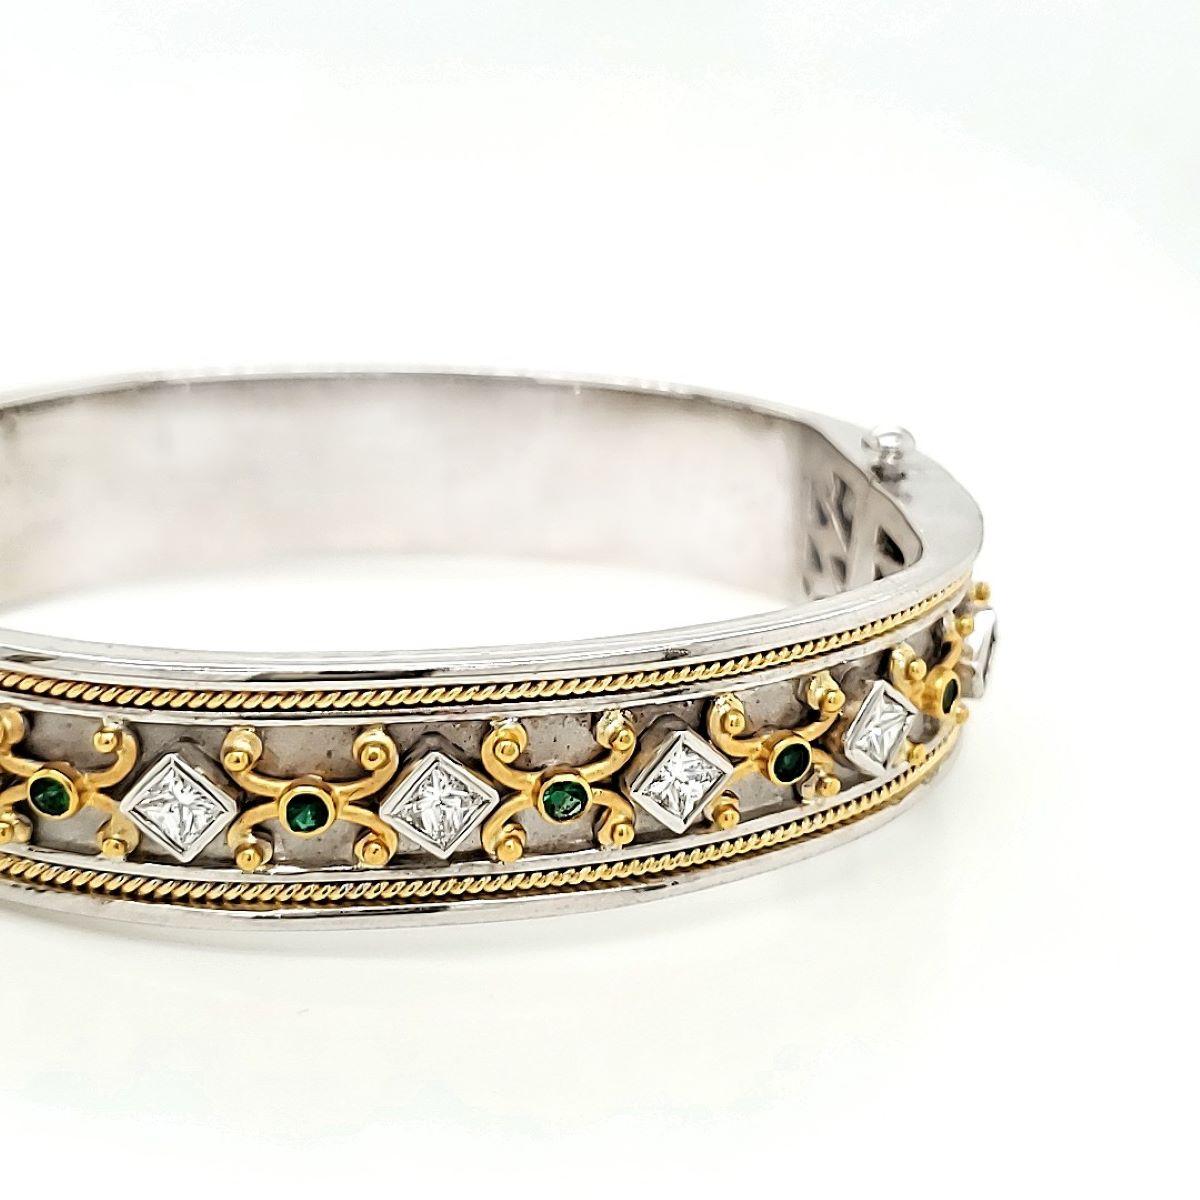 Emerald Cts 0.32 and Princess Cut Cts 1.15 Diamond Bangle Bracelet For Sale 1